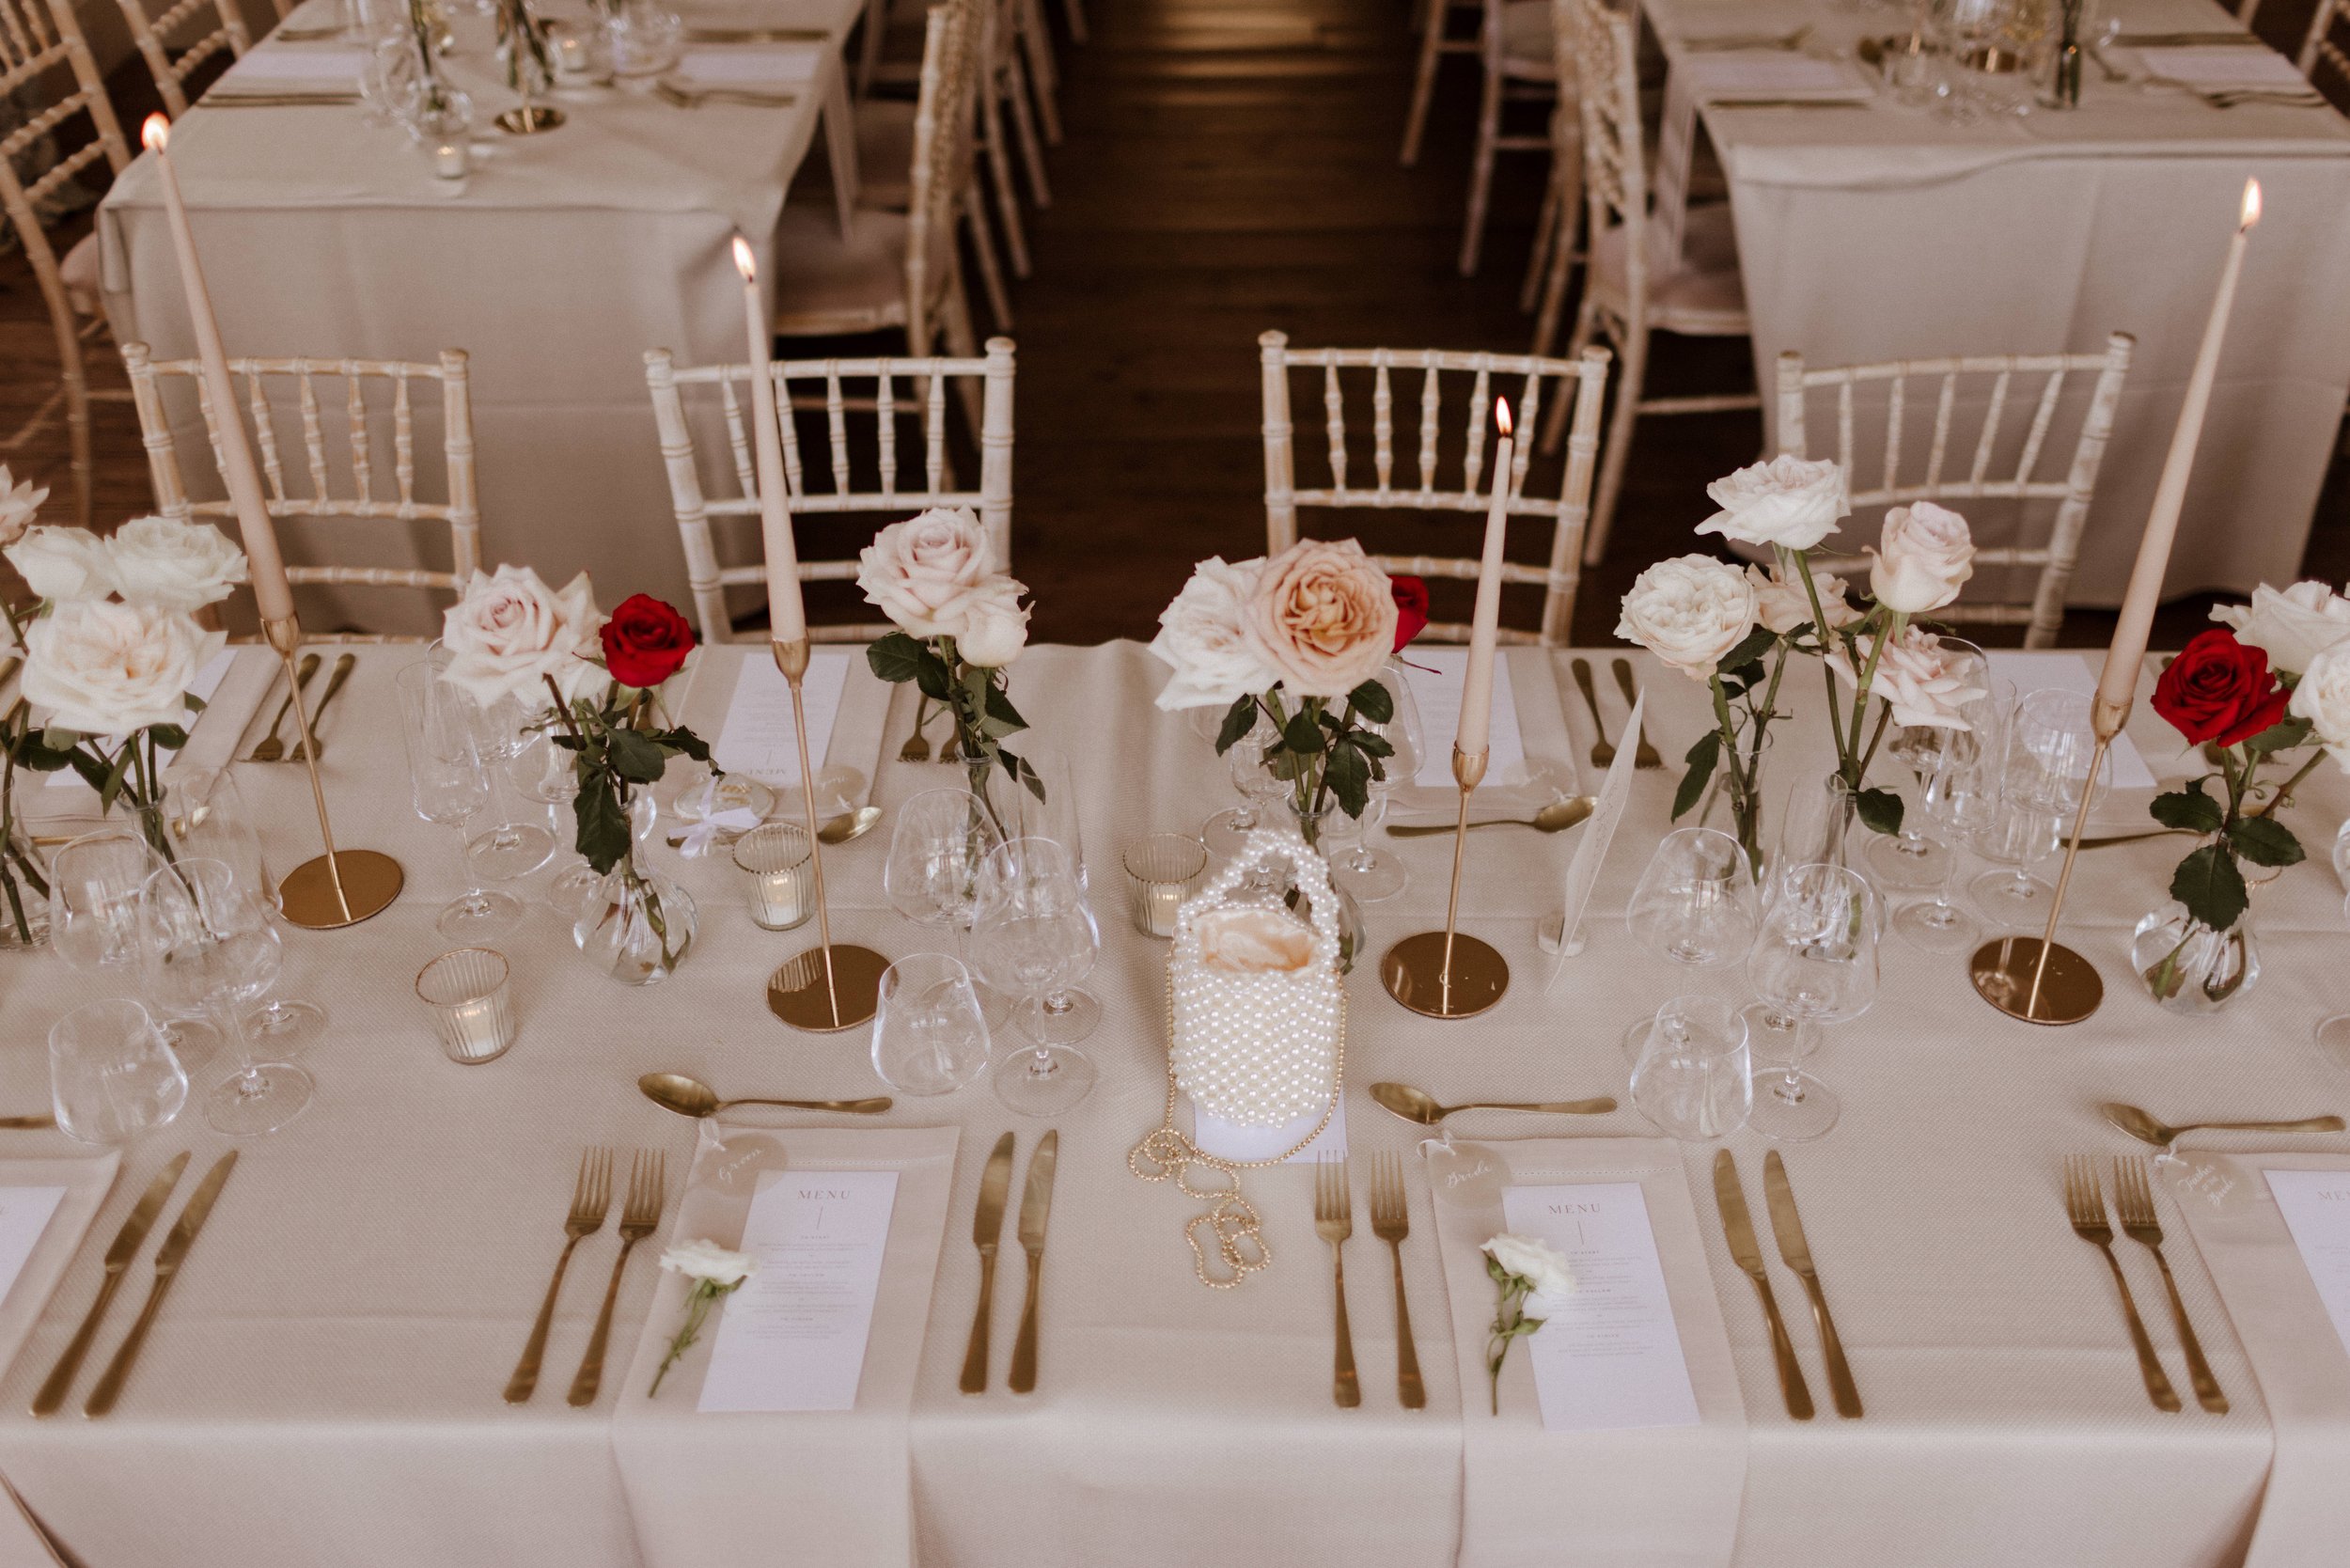 Minimalistic wedding flowers, long table, chic table settings.jpg